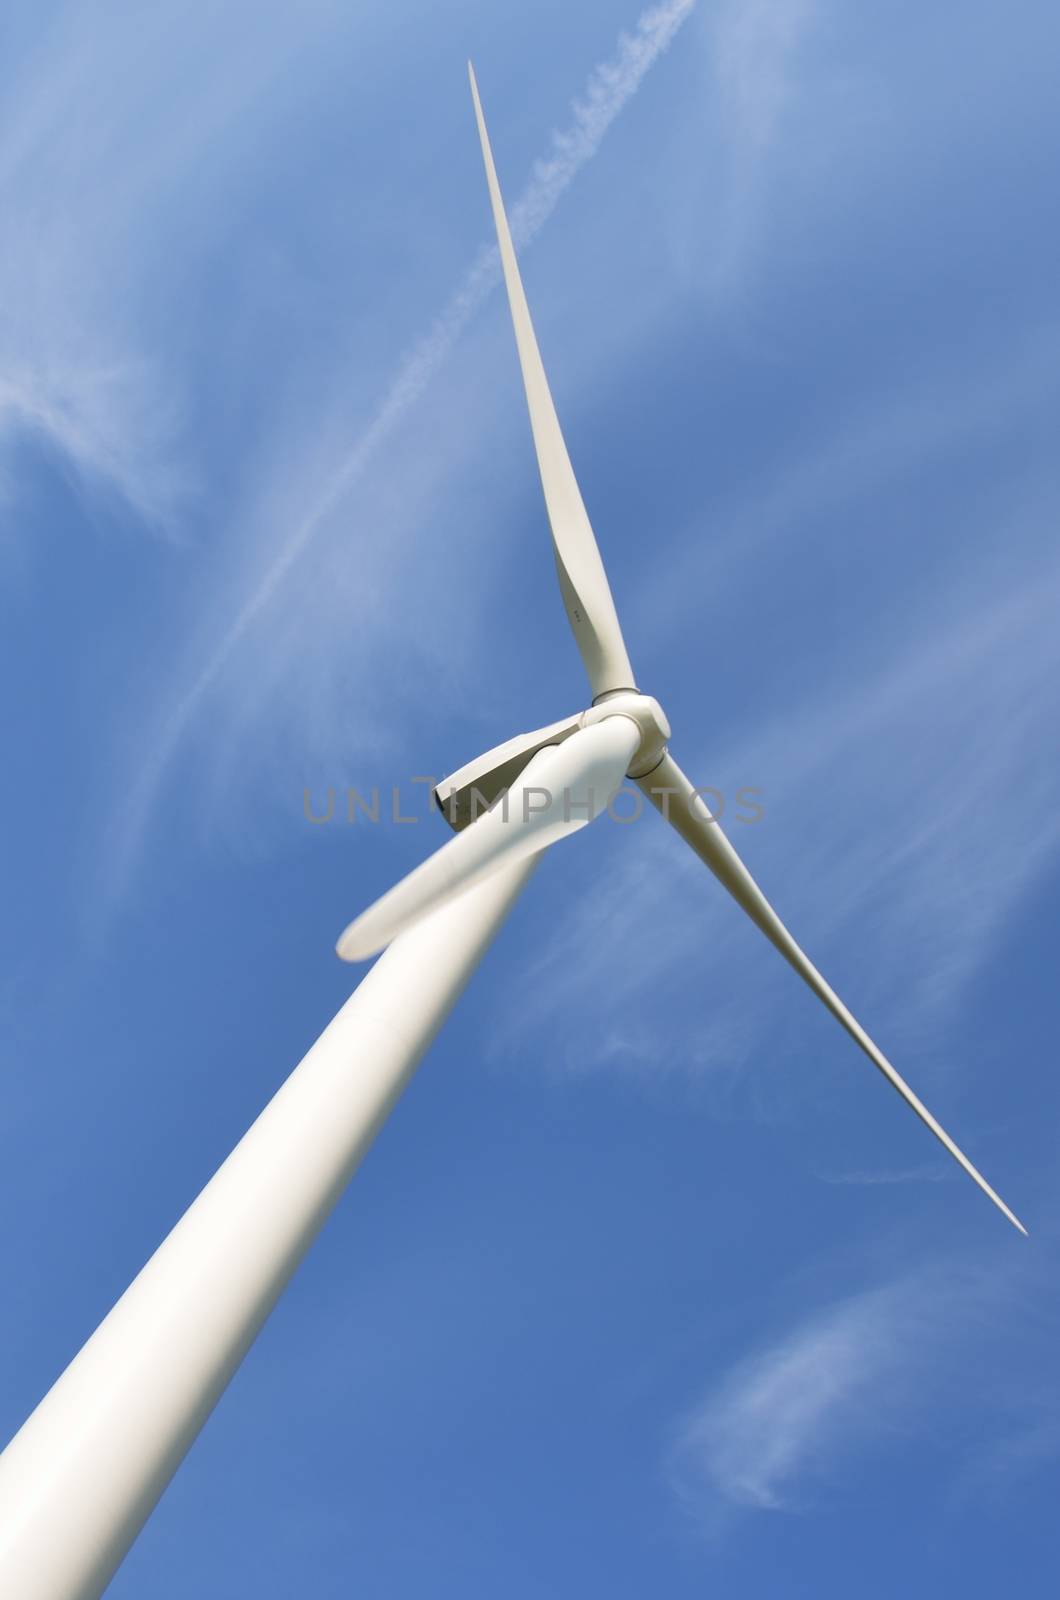 wind turbine at angle by pauws99